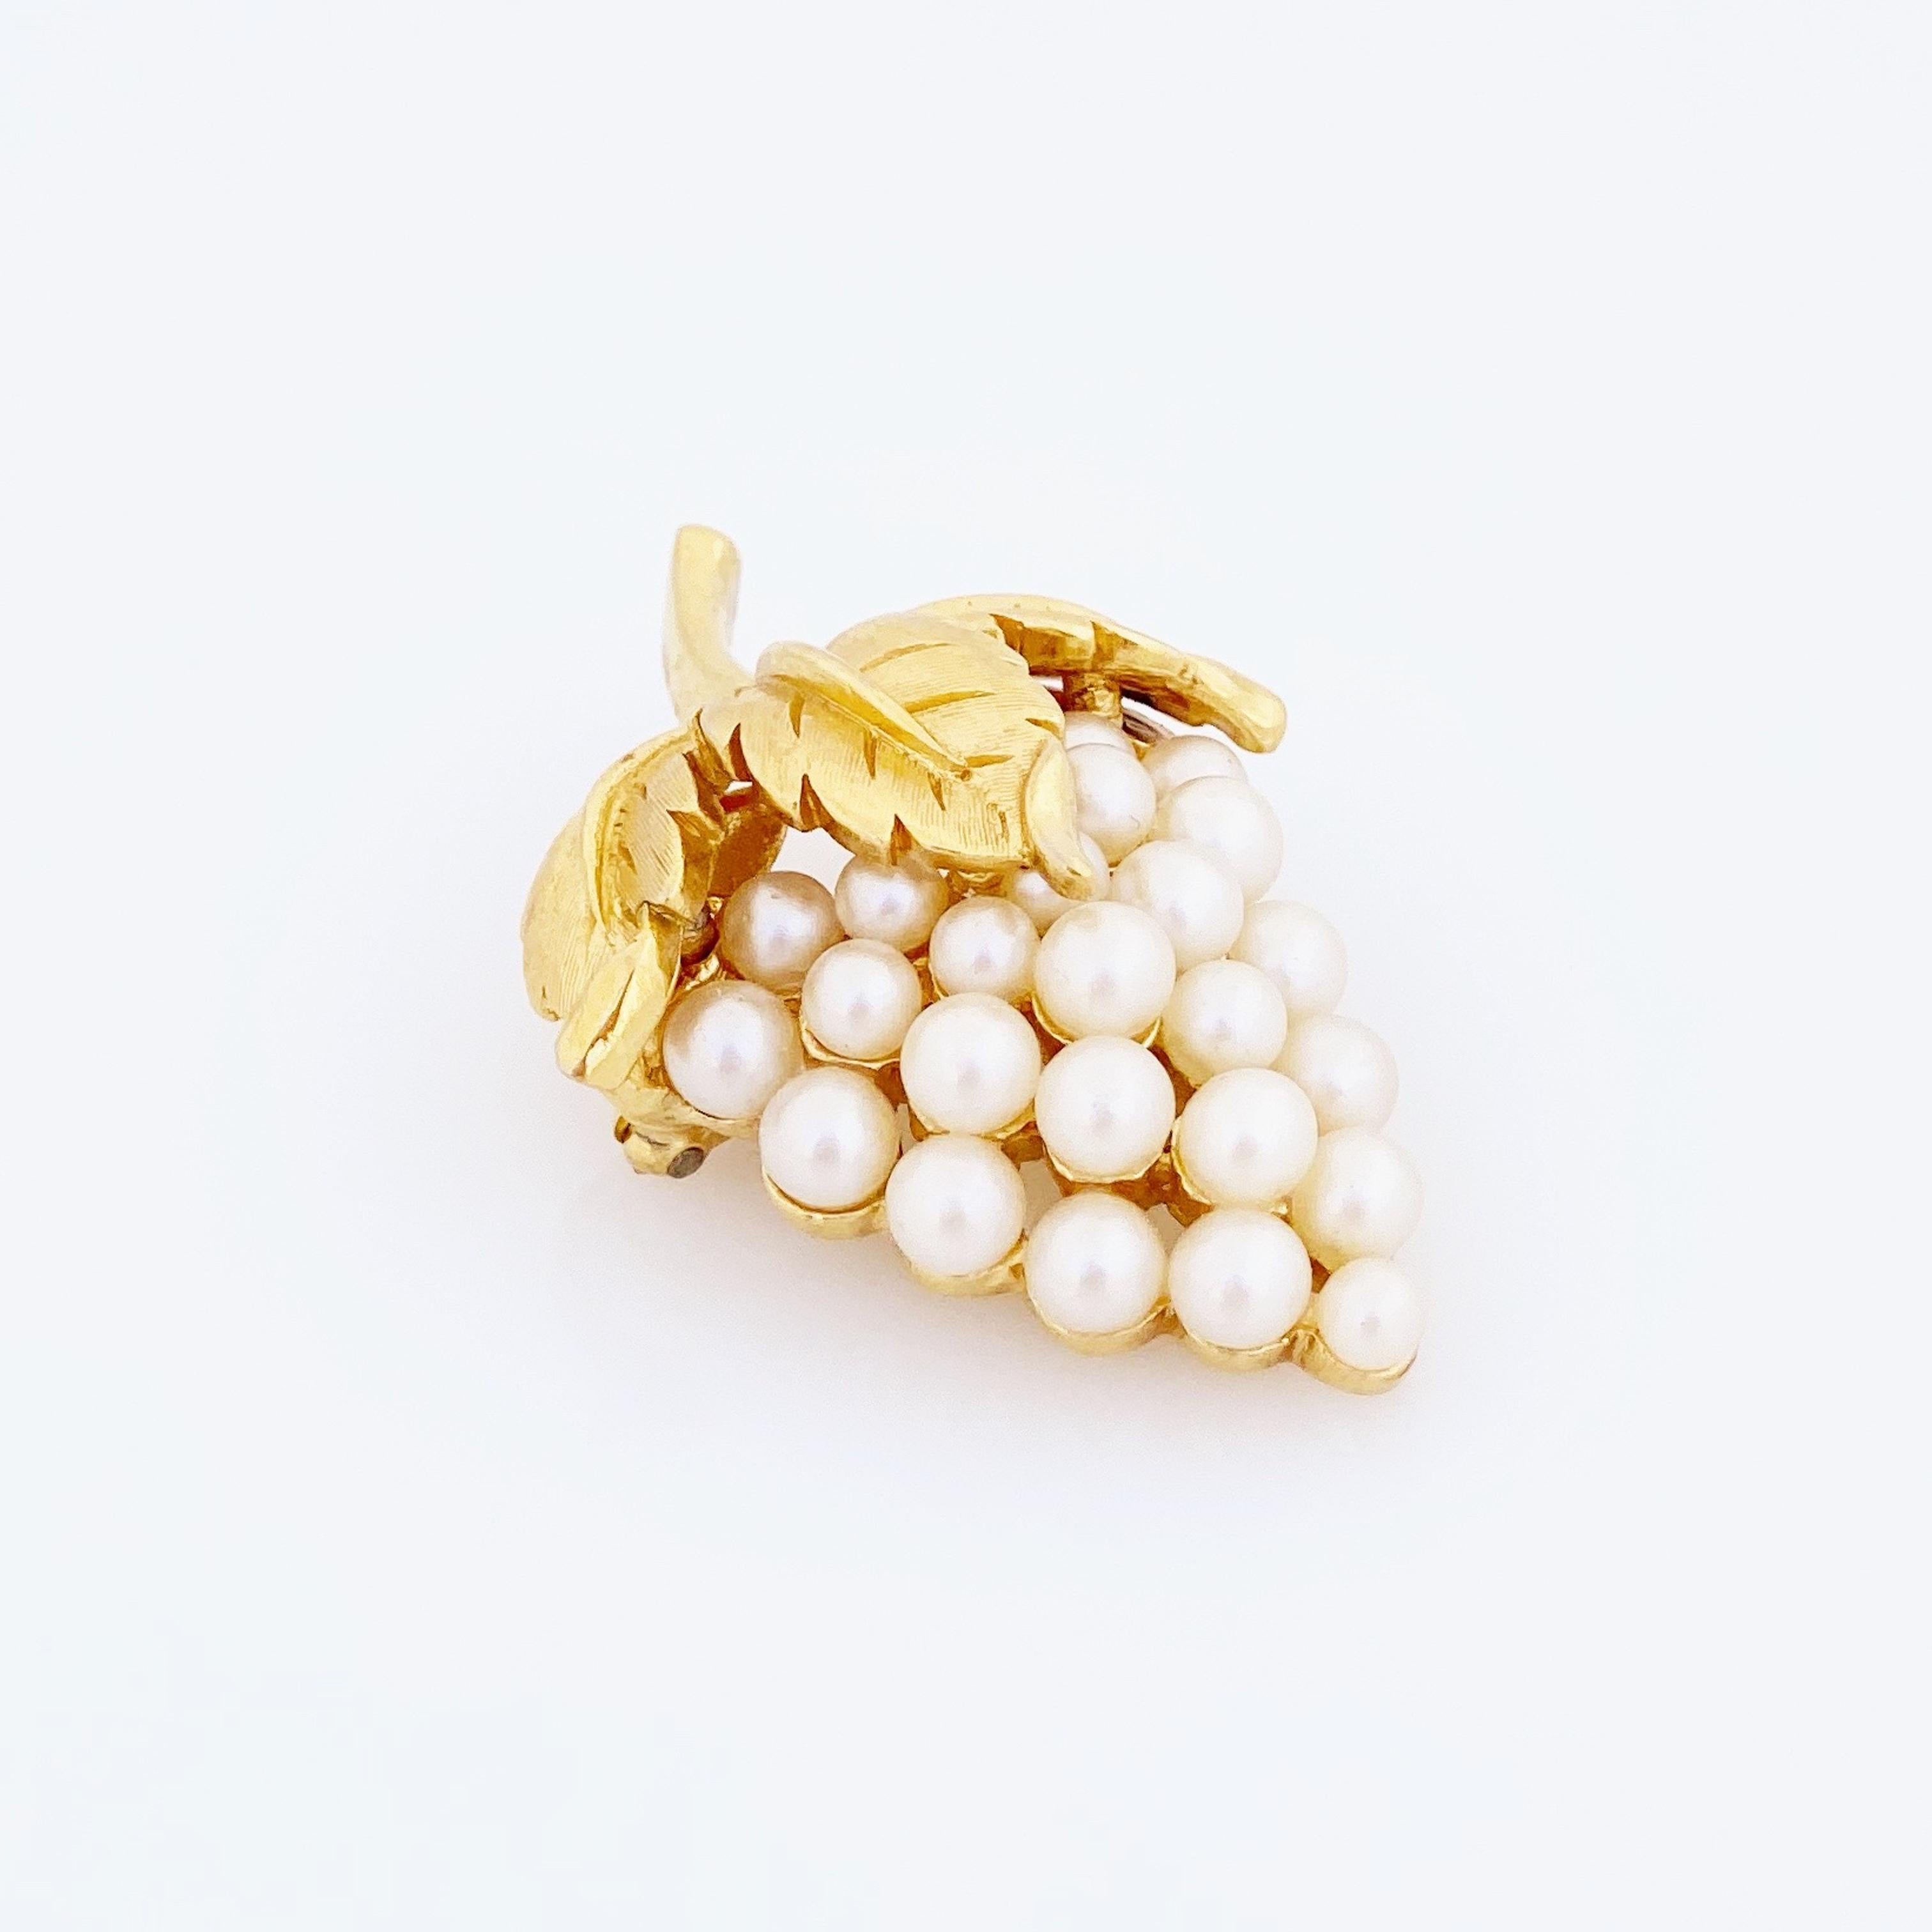 trifari brooch with pearls